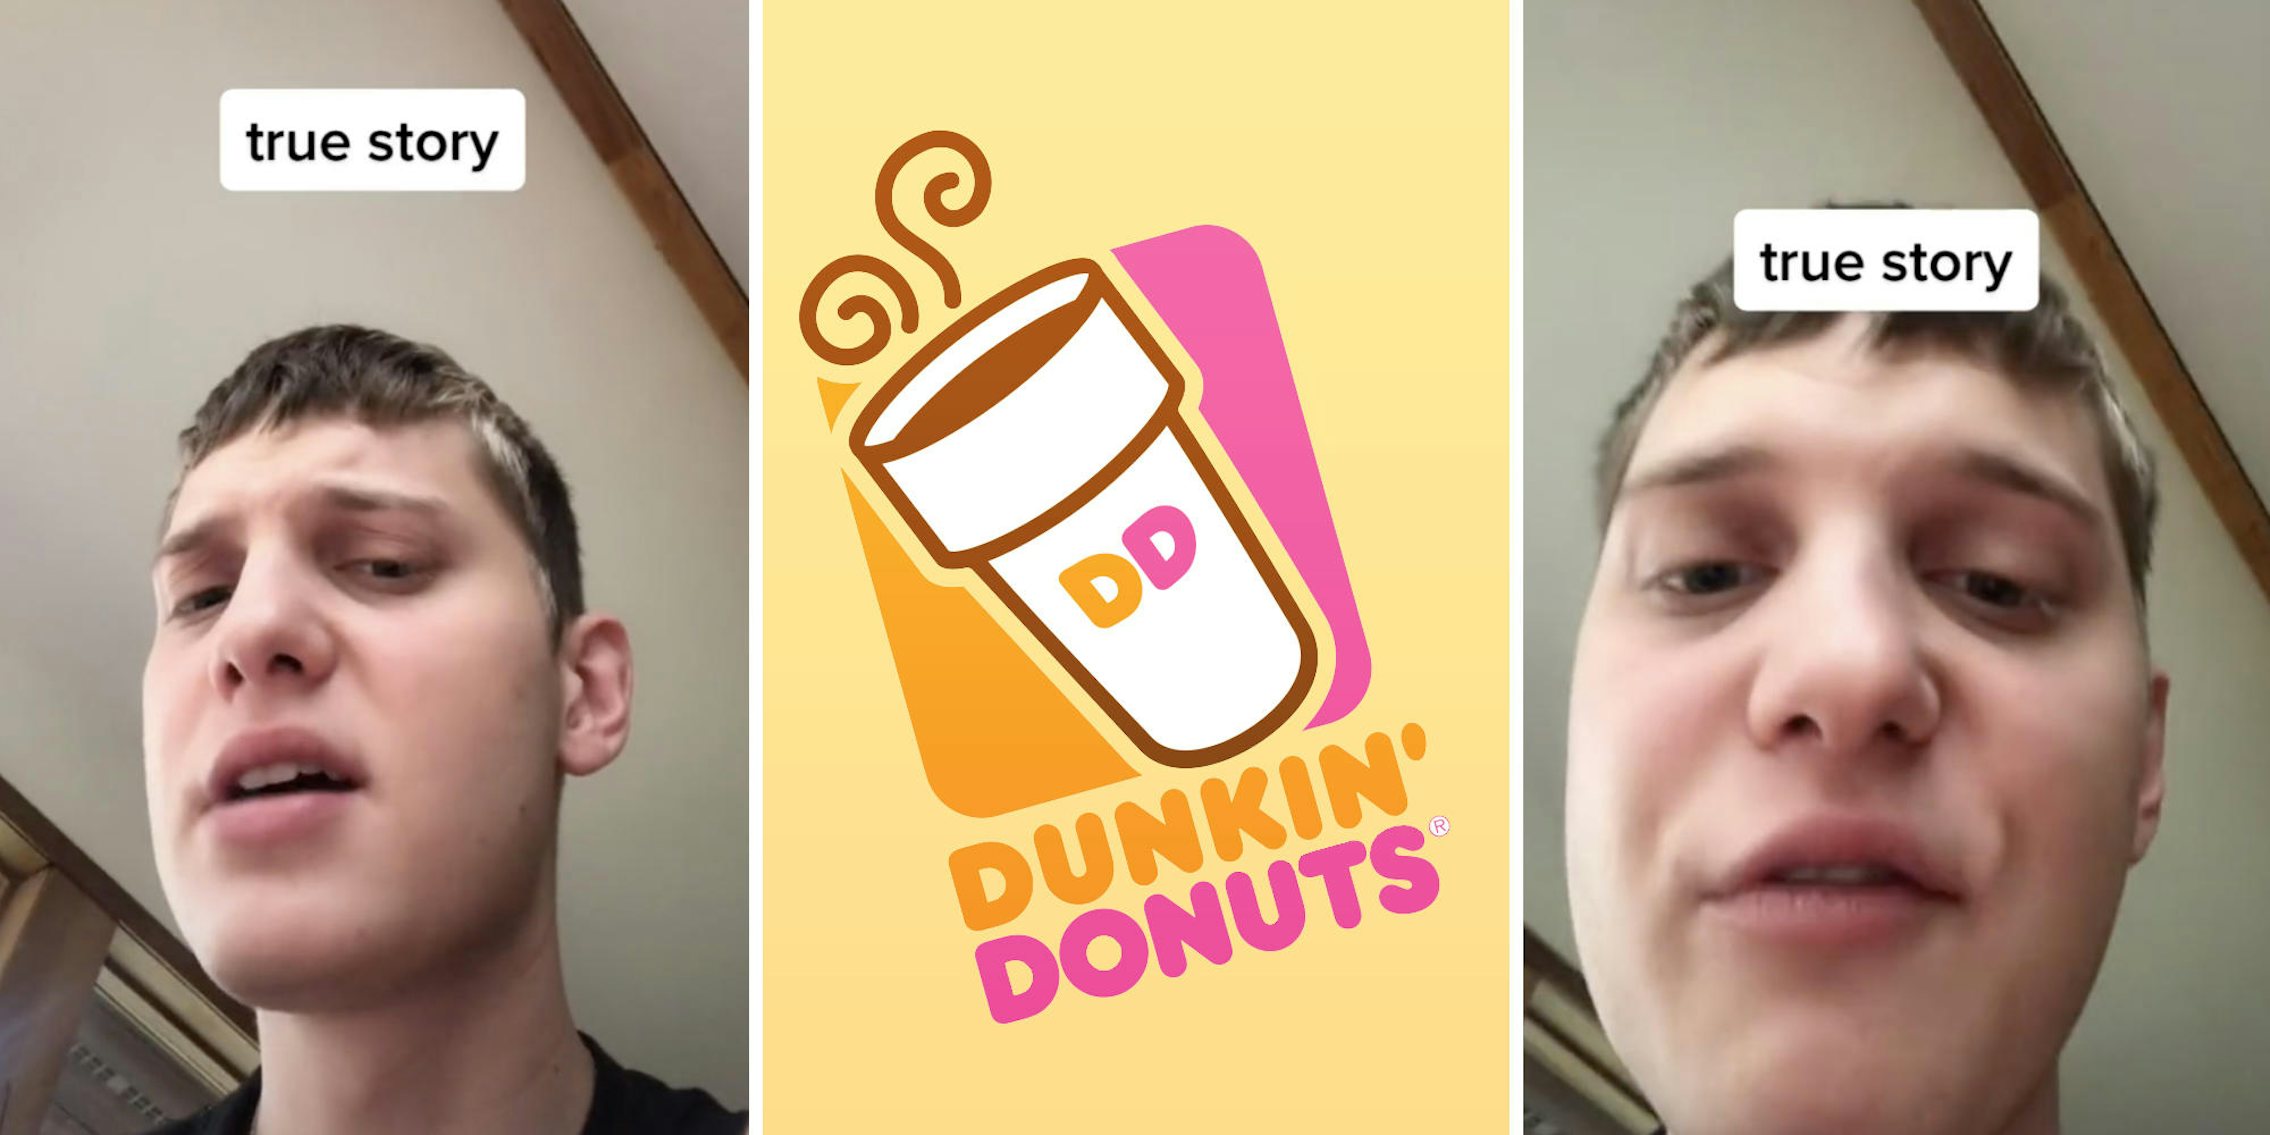 man in room looking sad (l) dunkin donuts logo (c) puzzled man (r)